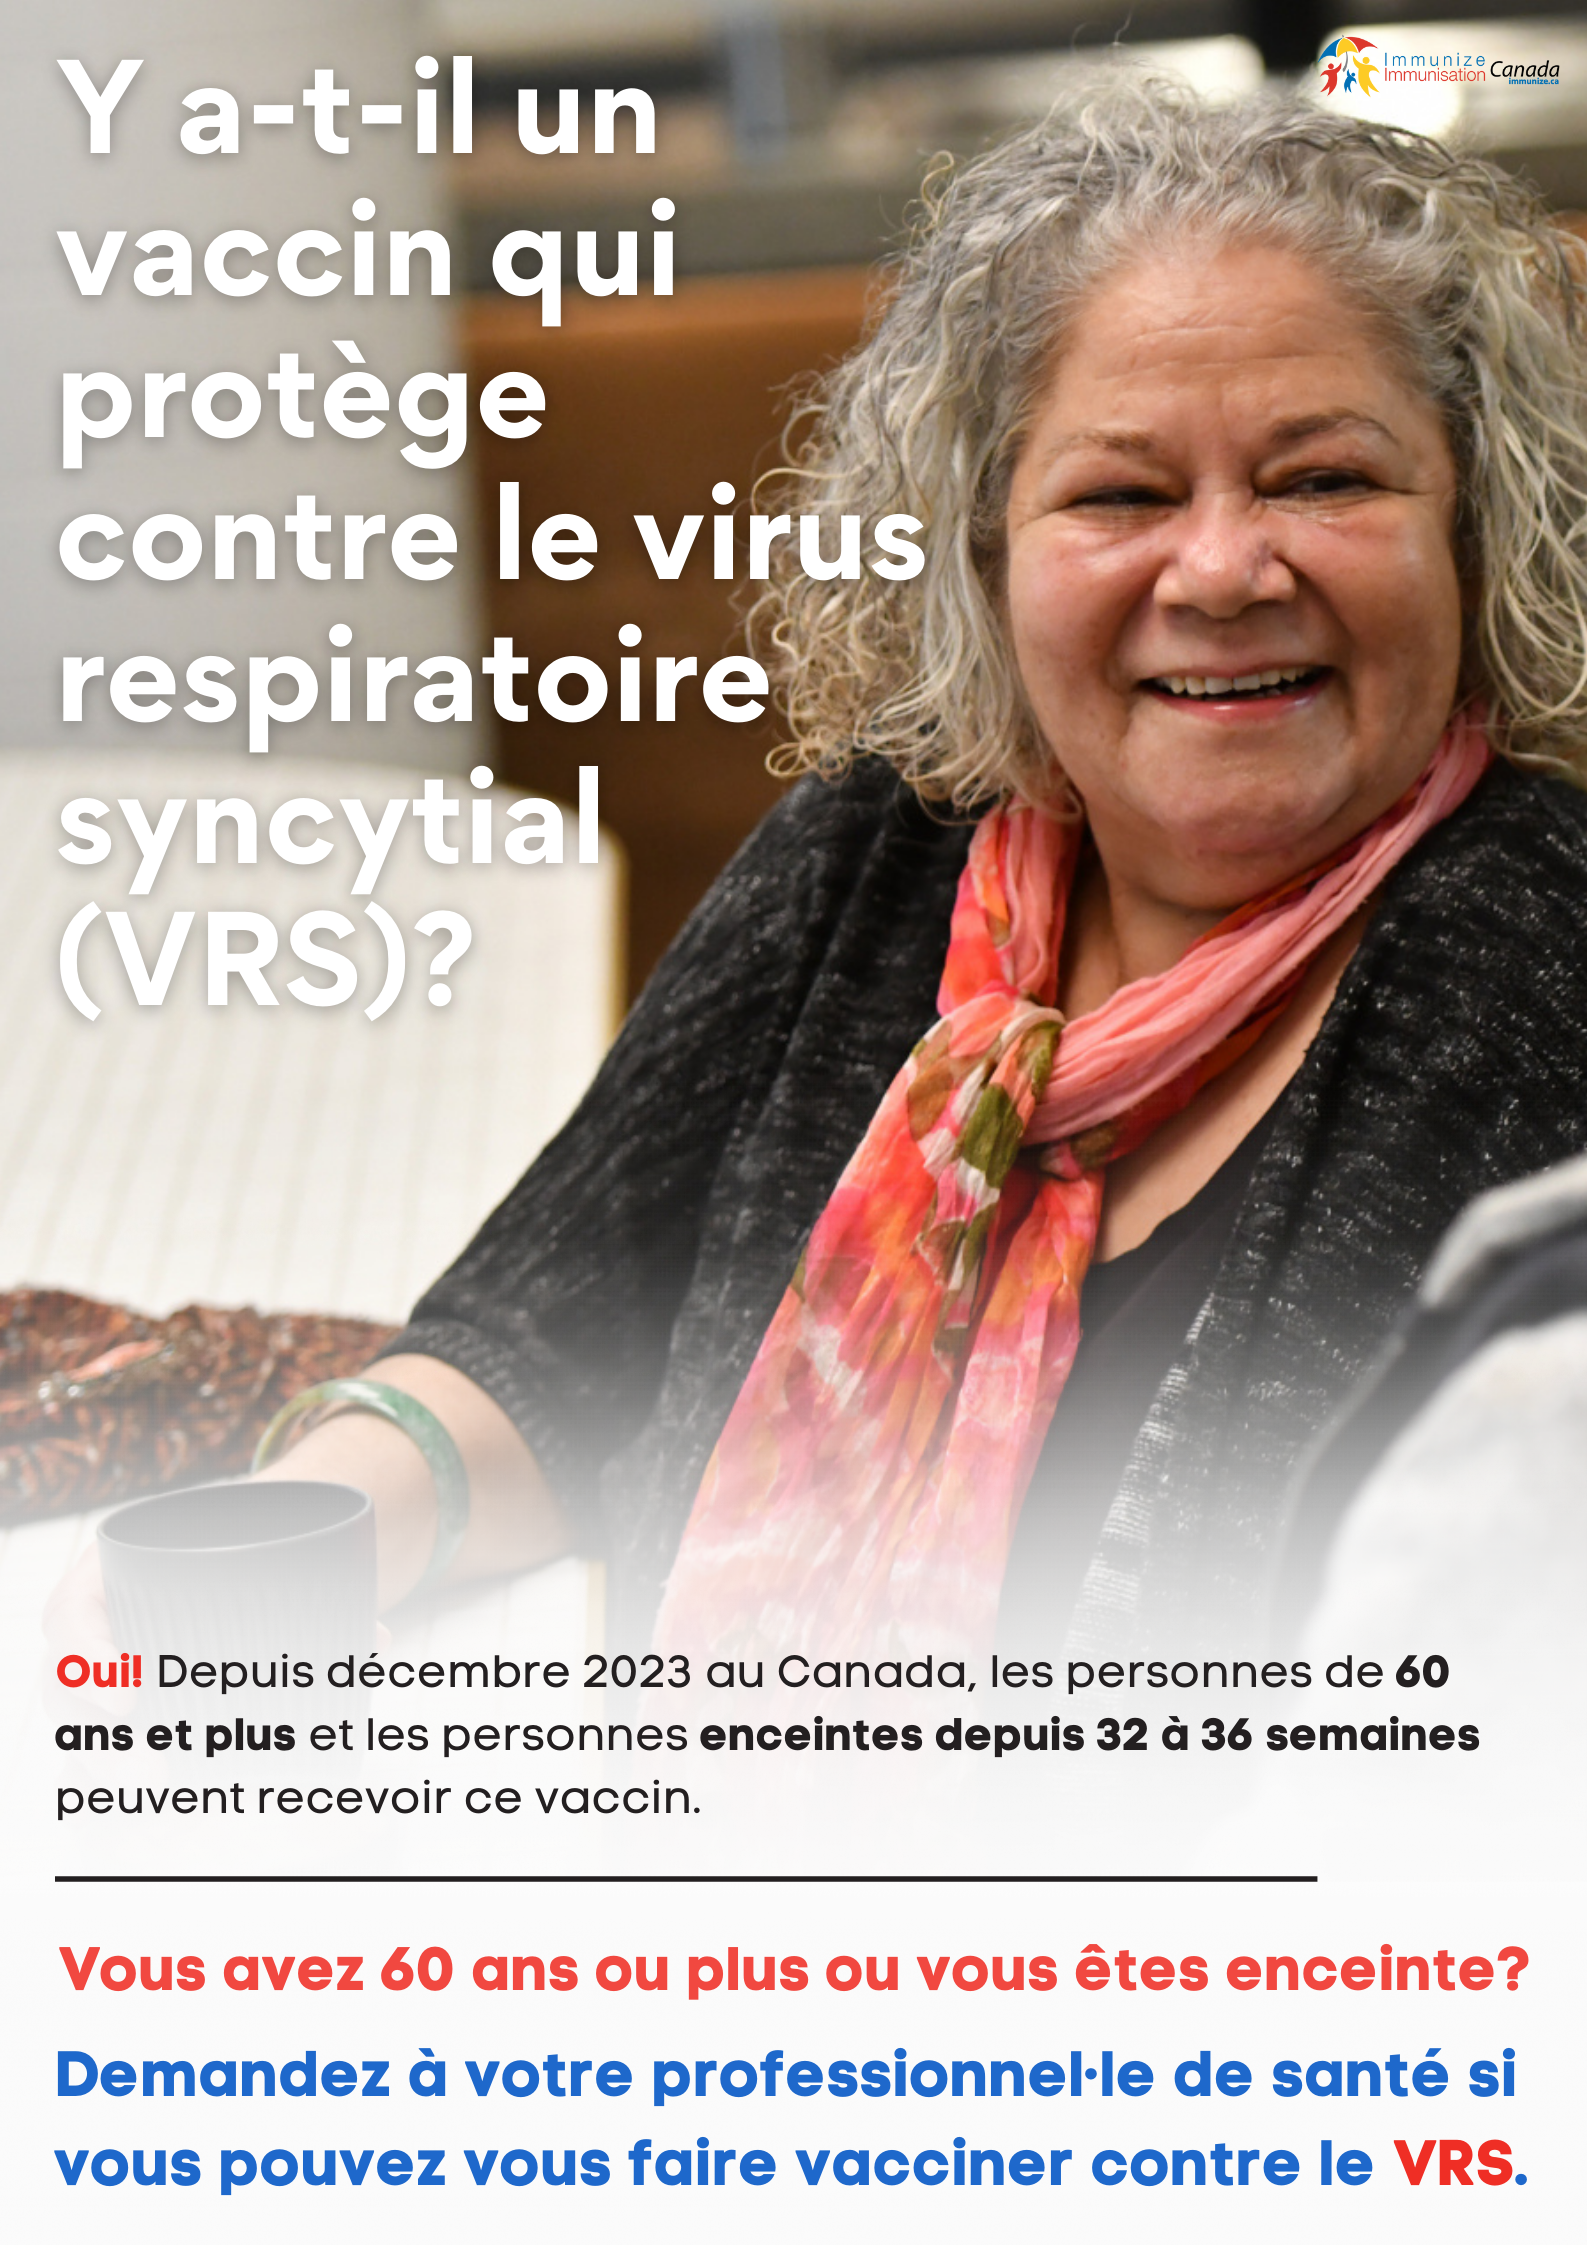 Y a-t-il un vaccin qui protège contre le virus respiratoire syncytial (VRS)? (affiche)